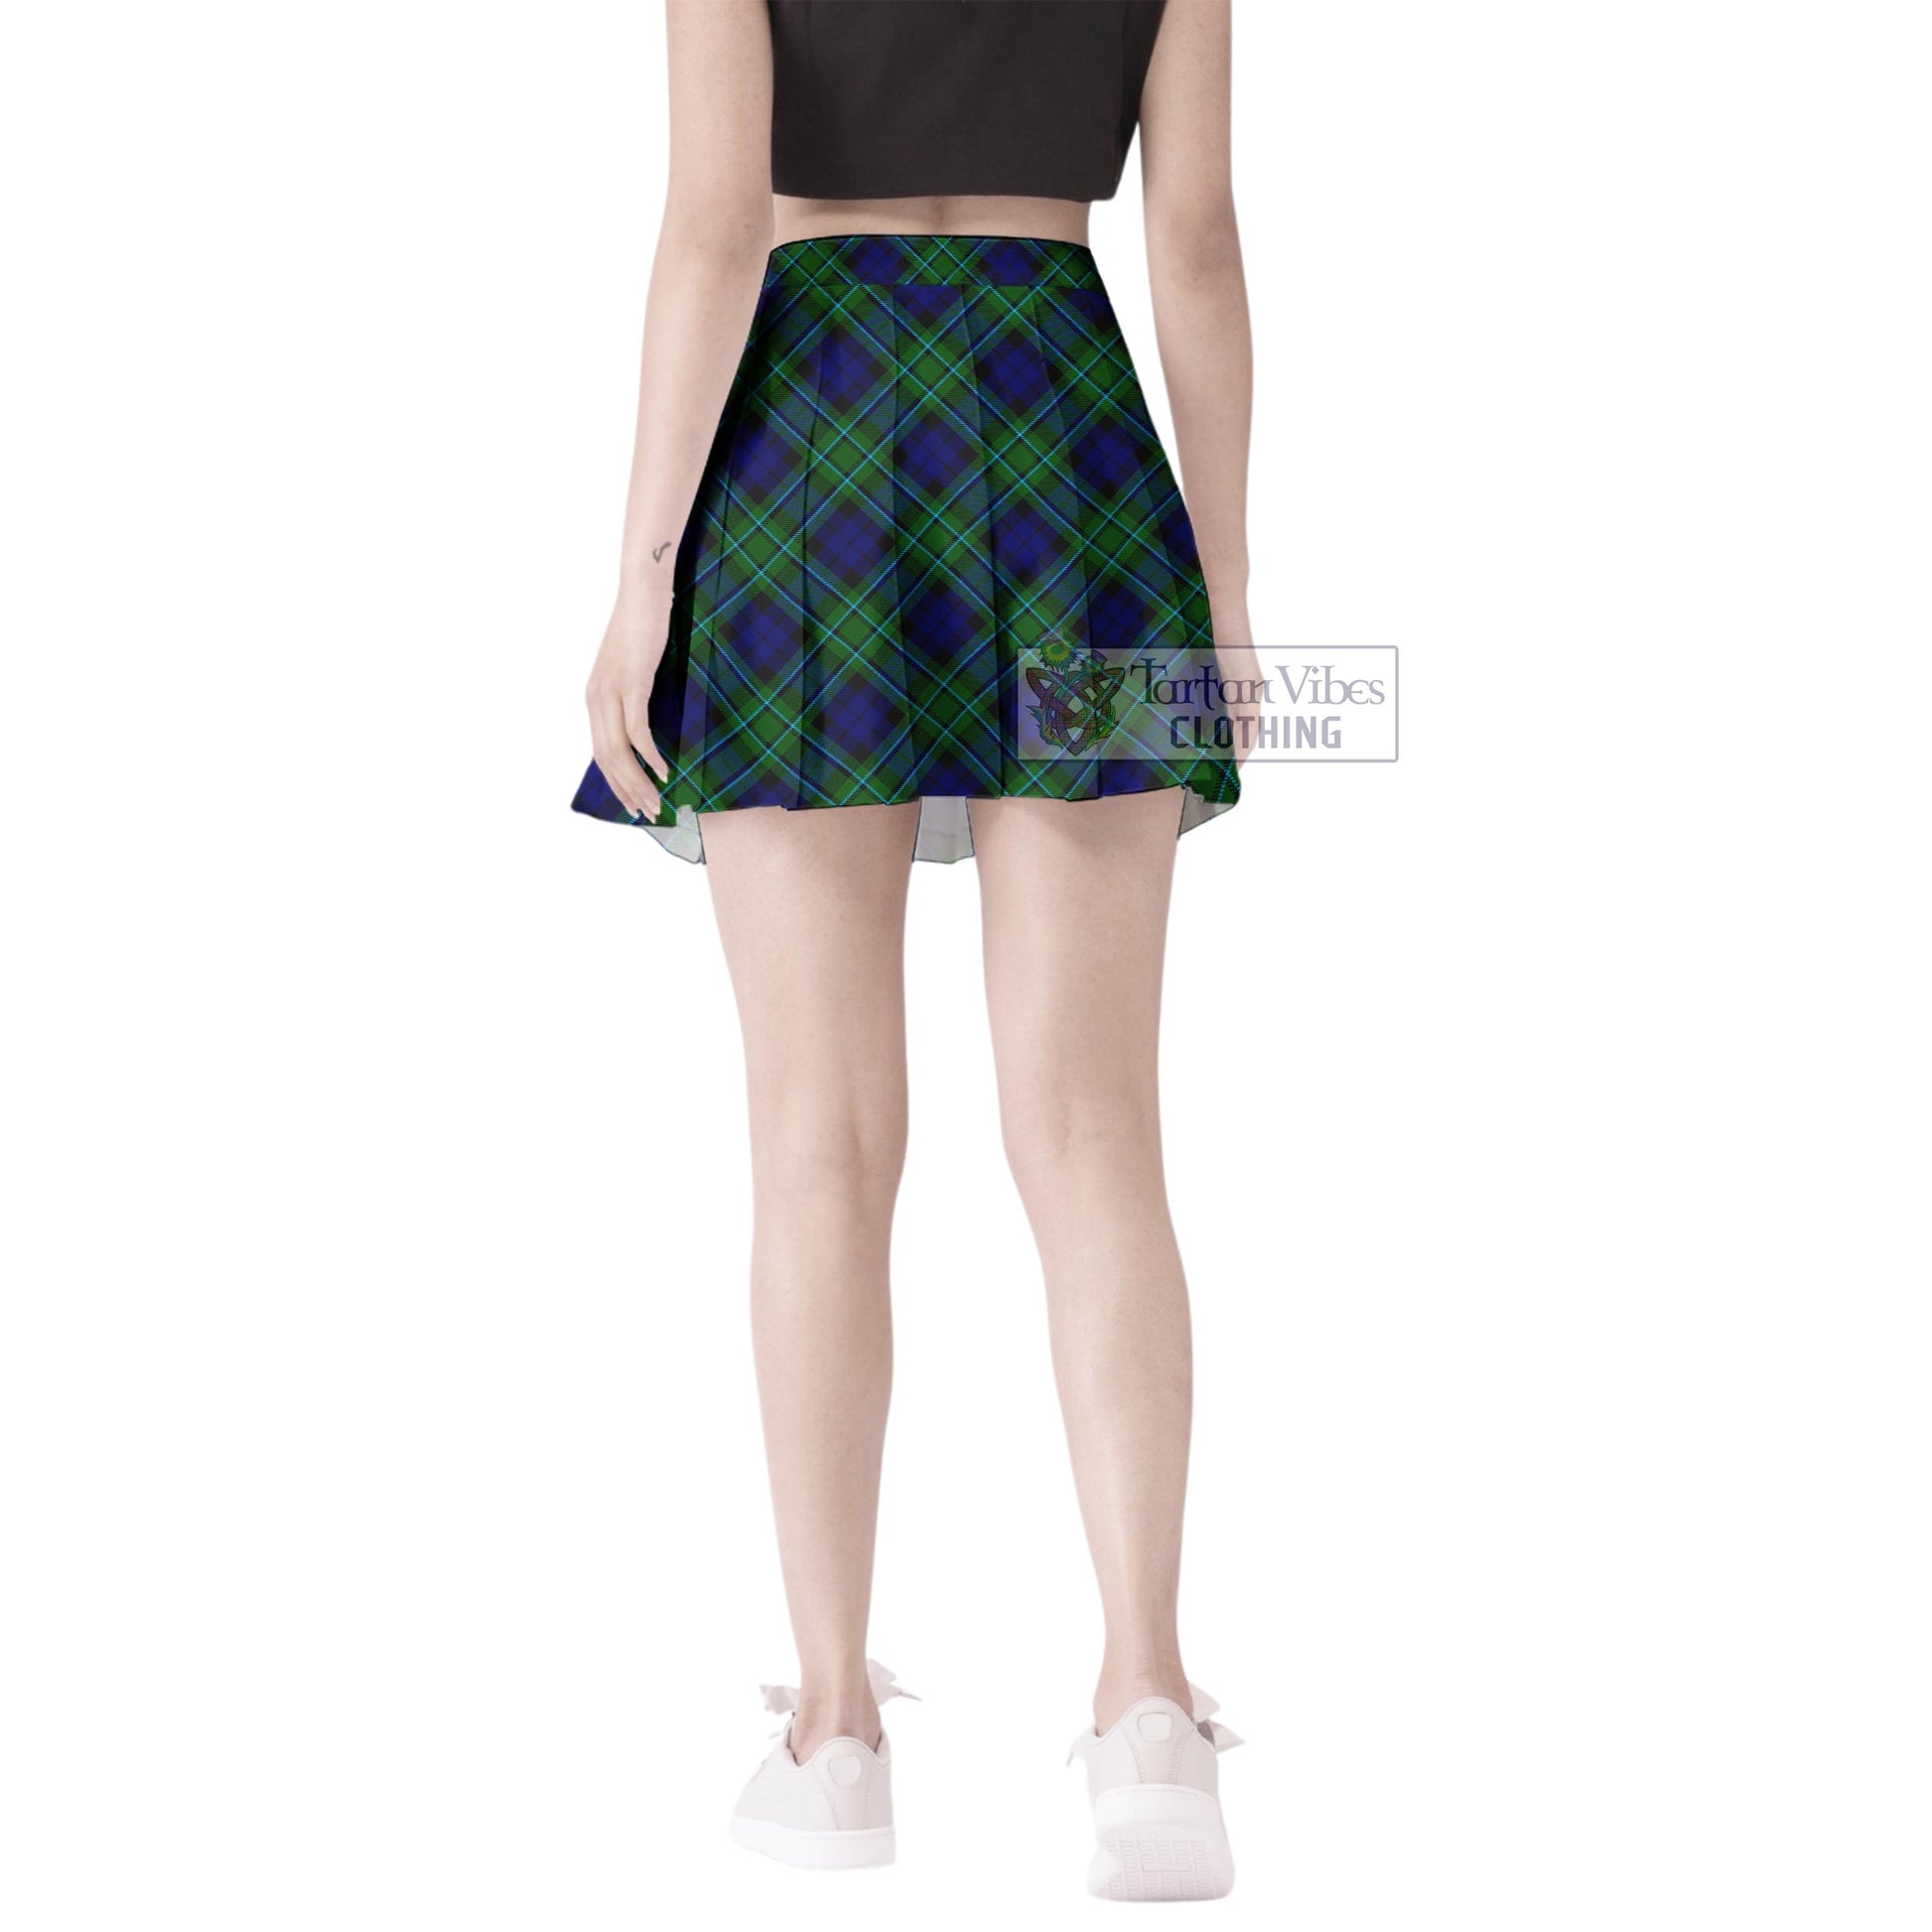 Tartan Vibes Clothing MacCallum Modern Tartan Women's Plated Mini Skirt